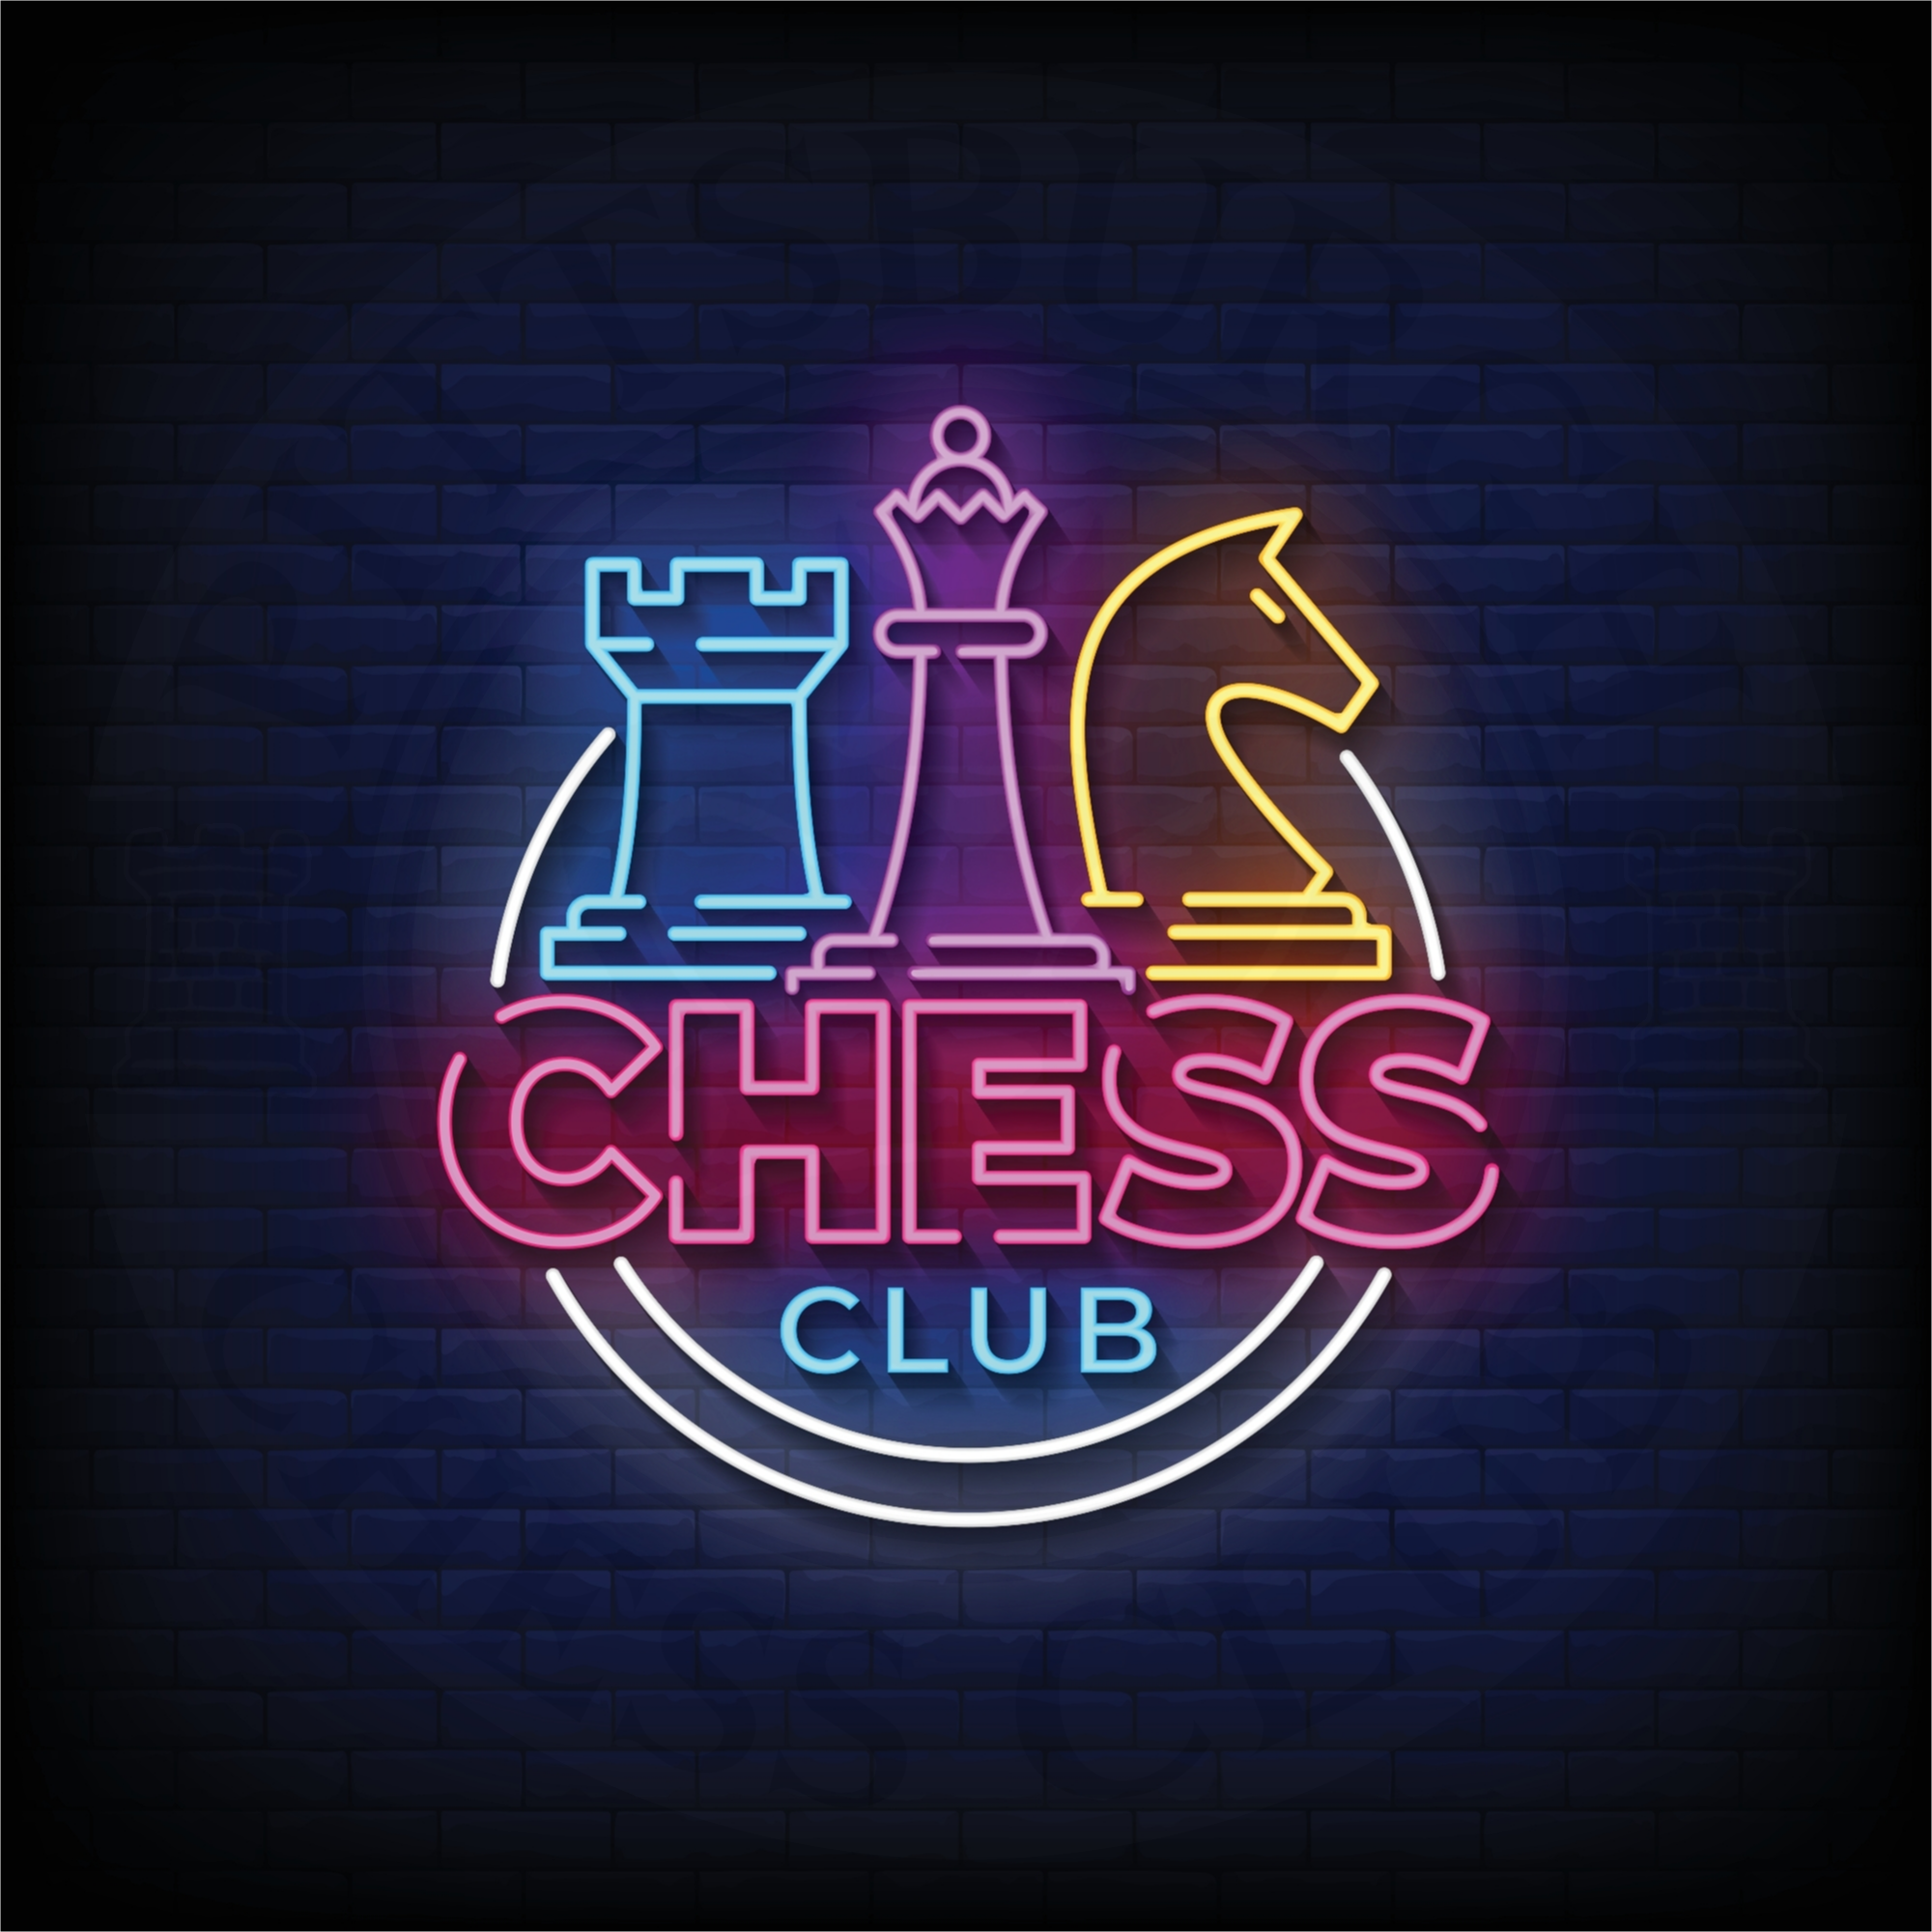 LGBT Club - Chess Club 